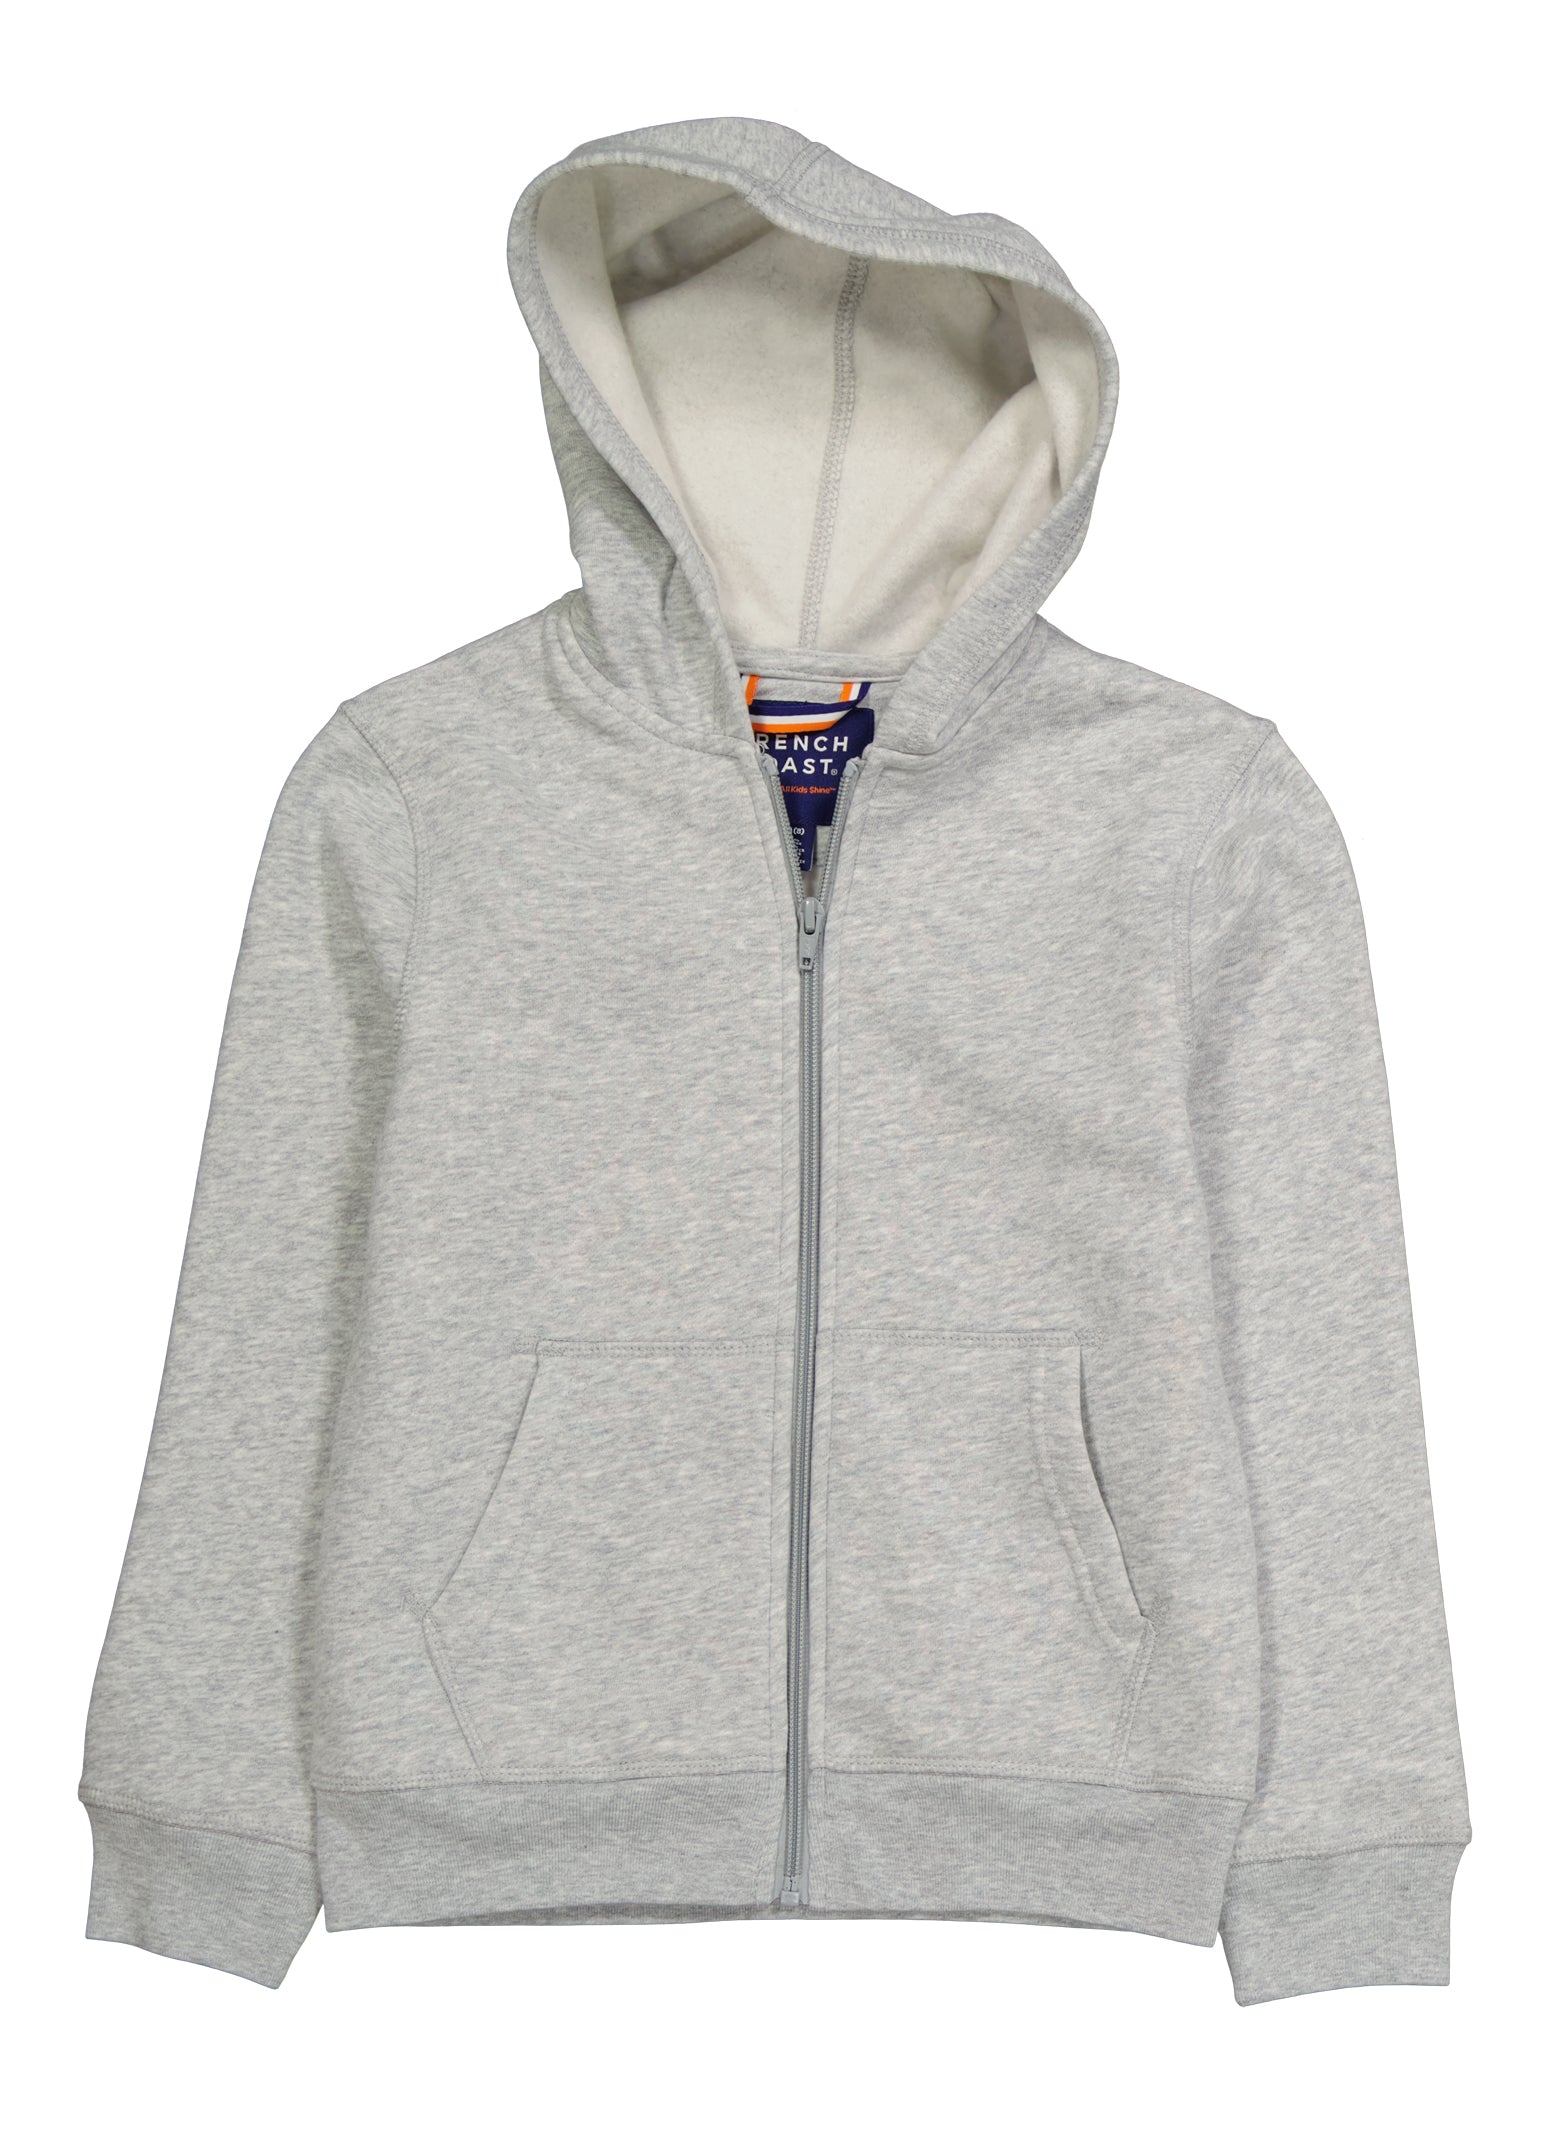 French Toast Boys 8-16 Zip Front Sweatshirt, Grey, Size 10-12